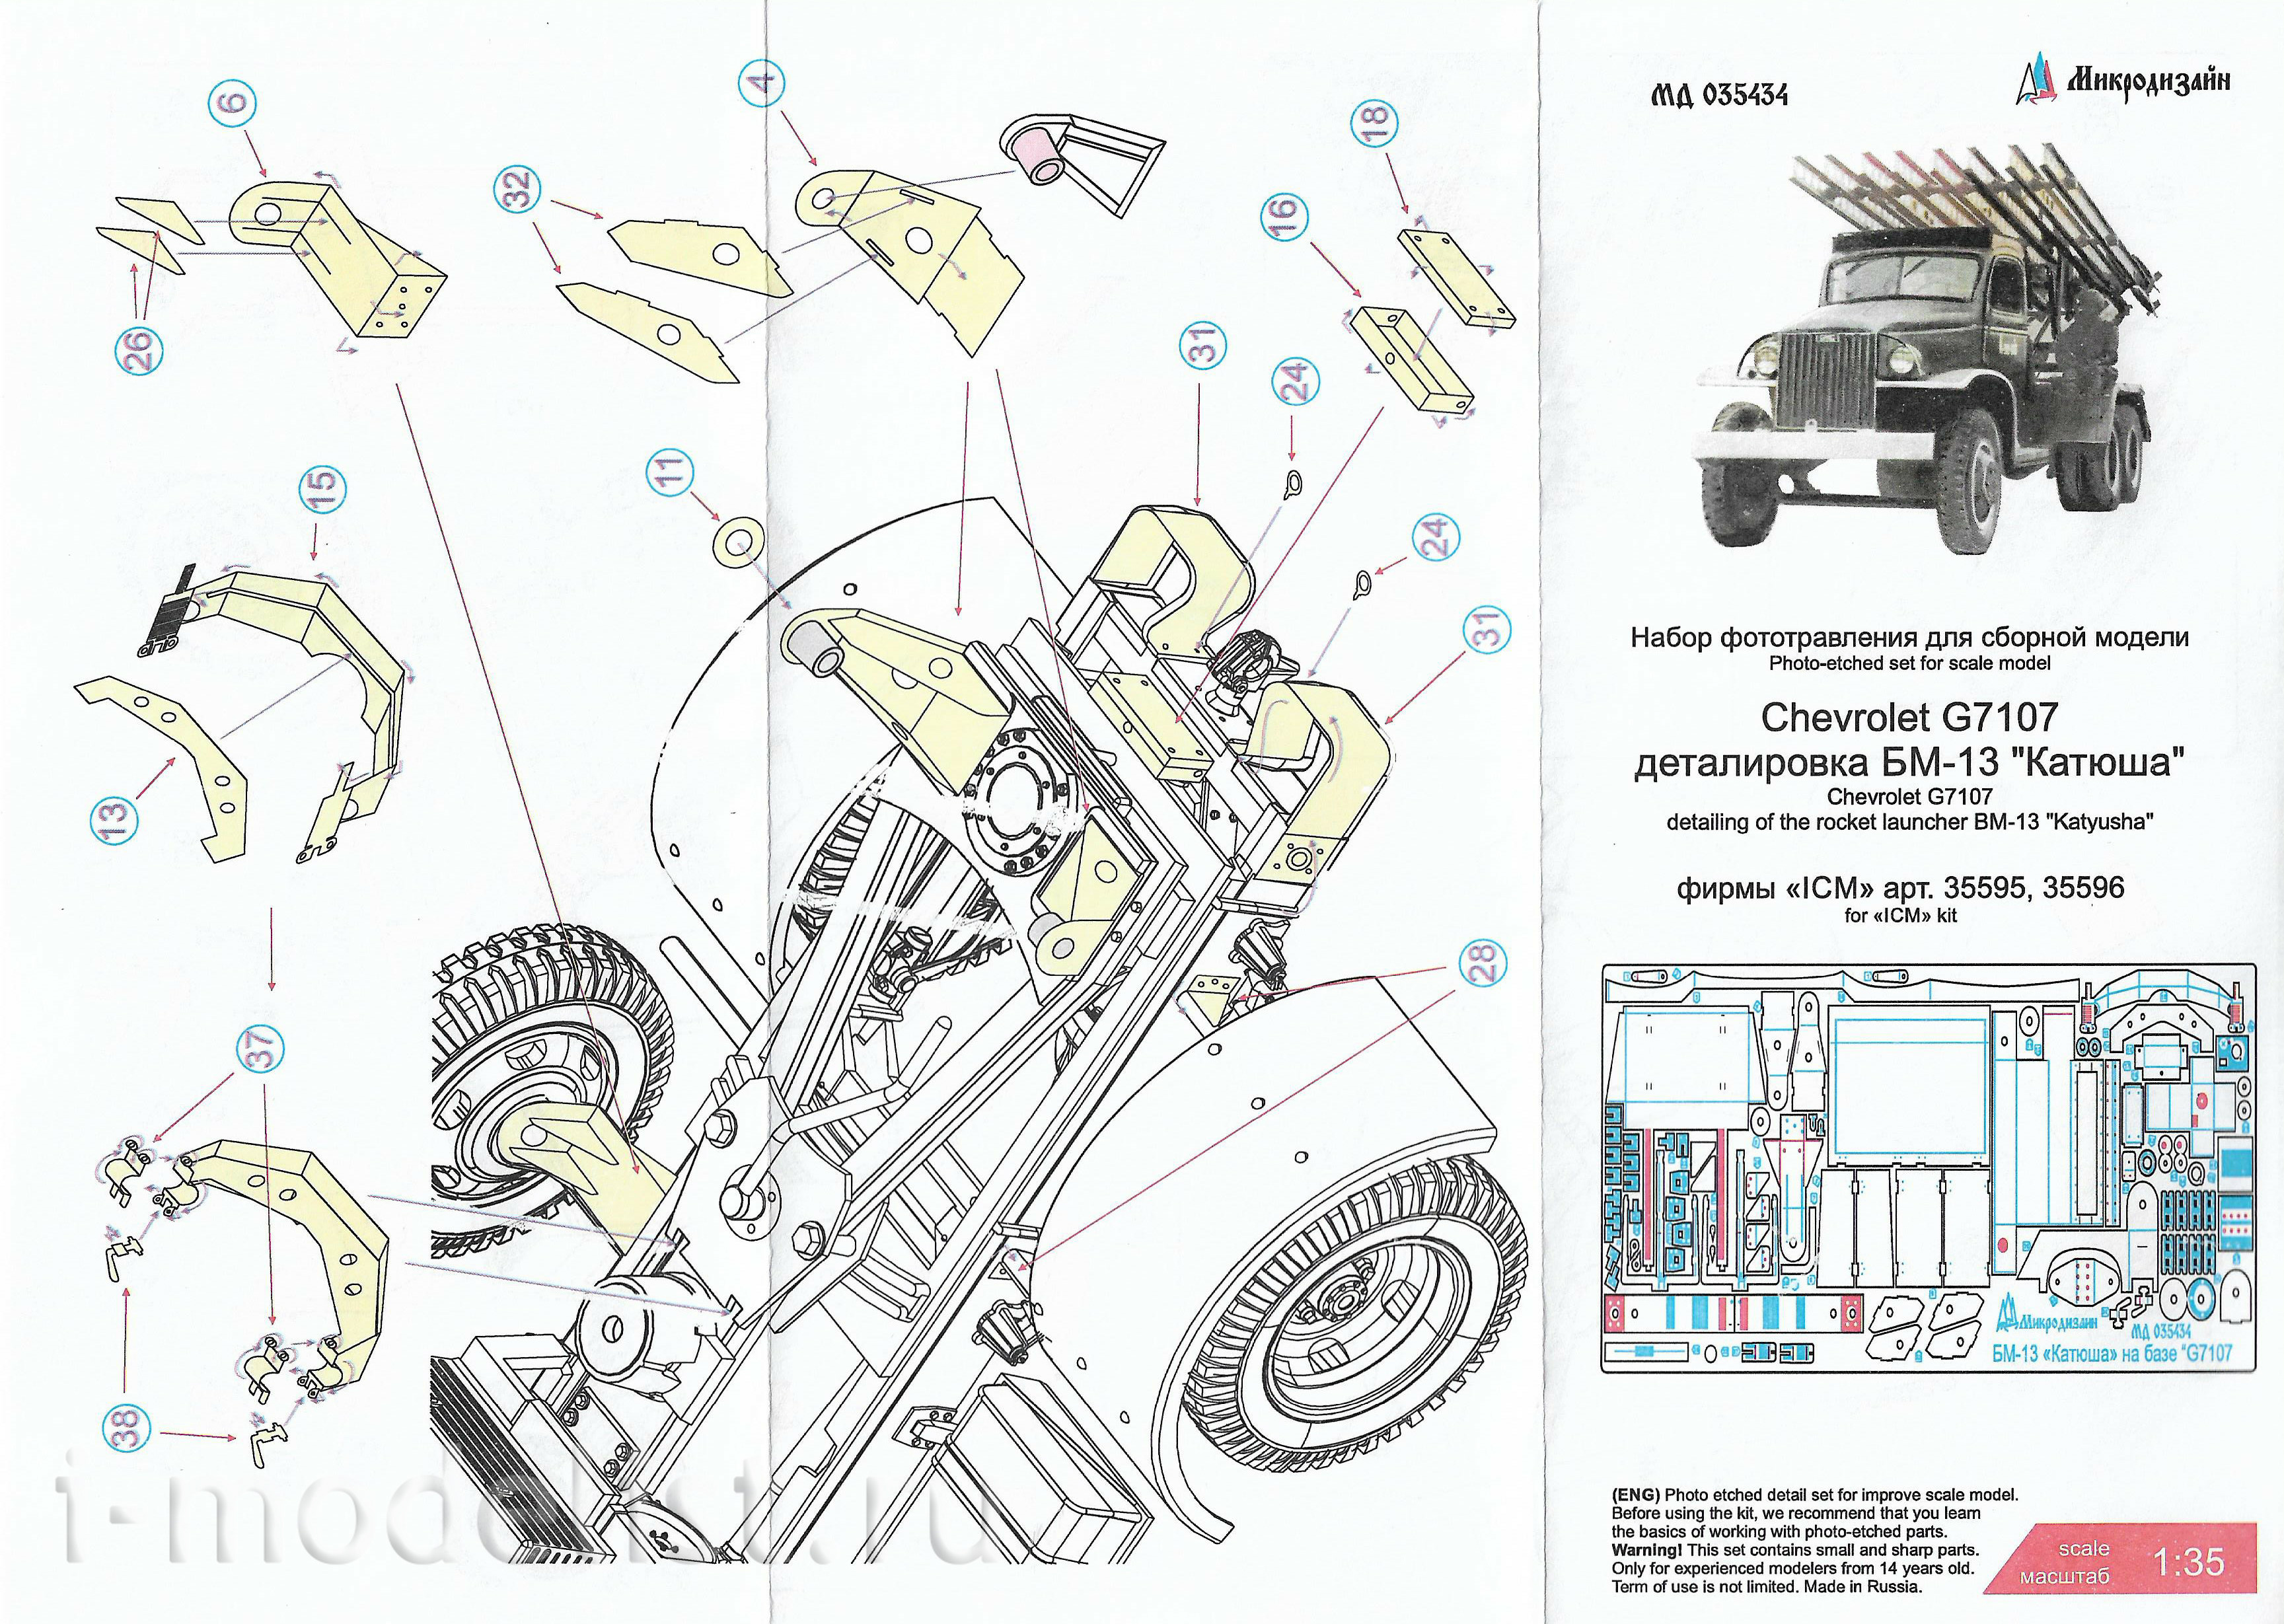 035434 Microdesign 1/35 Photo Etching Kit Installation BM-13 for Chevrolet G7107 (ICM)